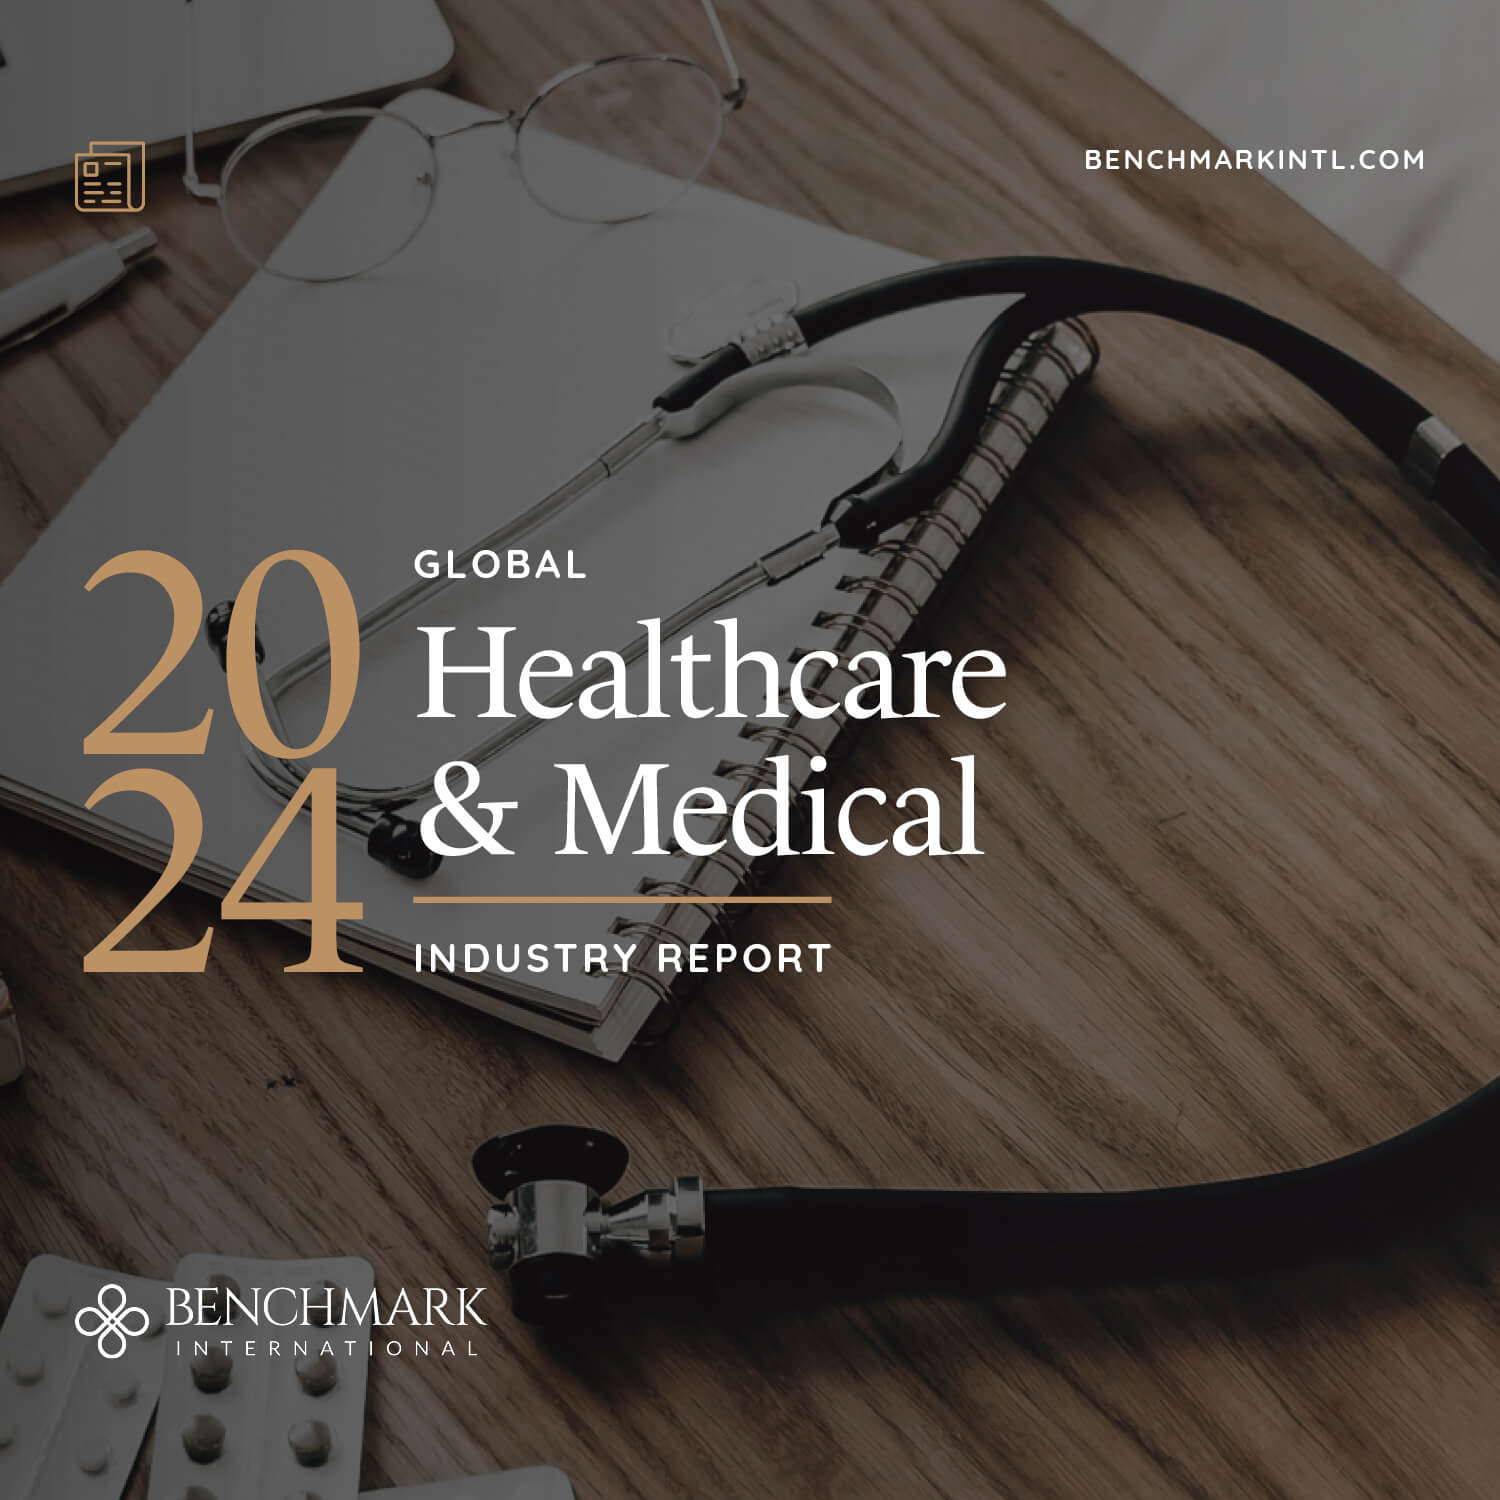 MRKTG_Social_Blog_Mobile_Industry_Report_Healthcare_&_Medical